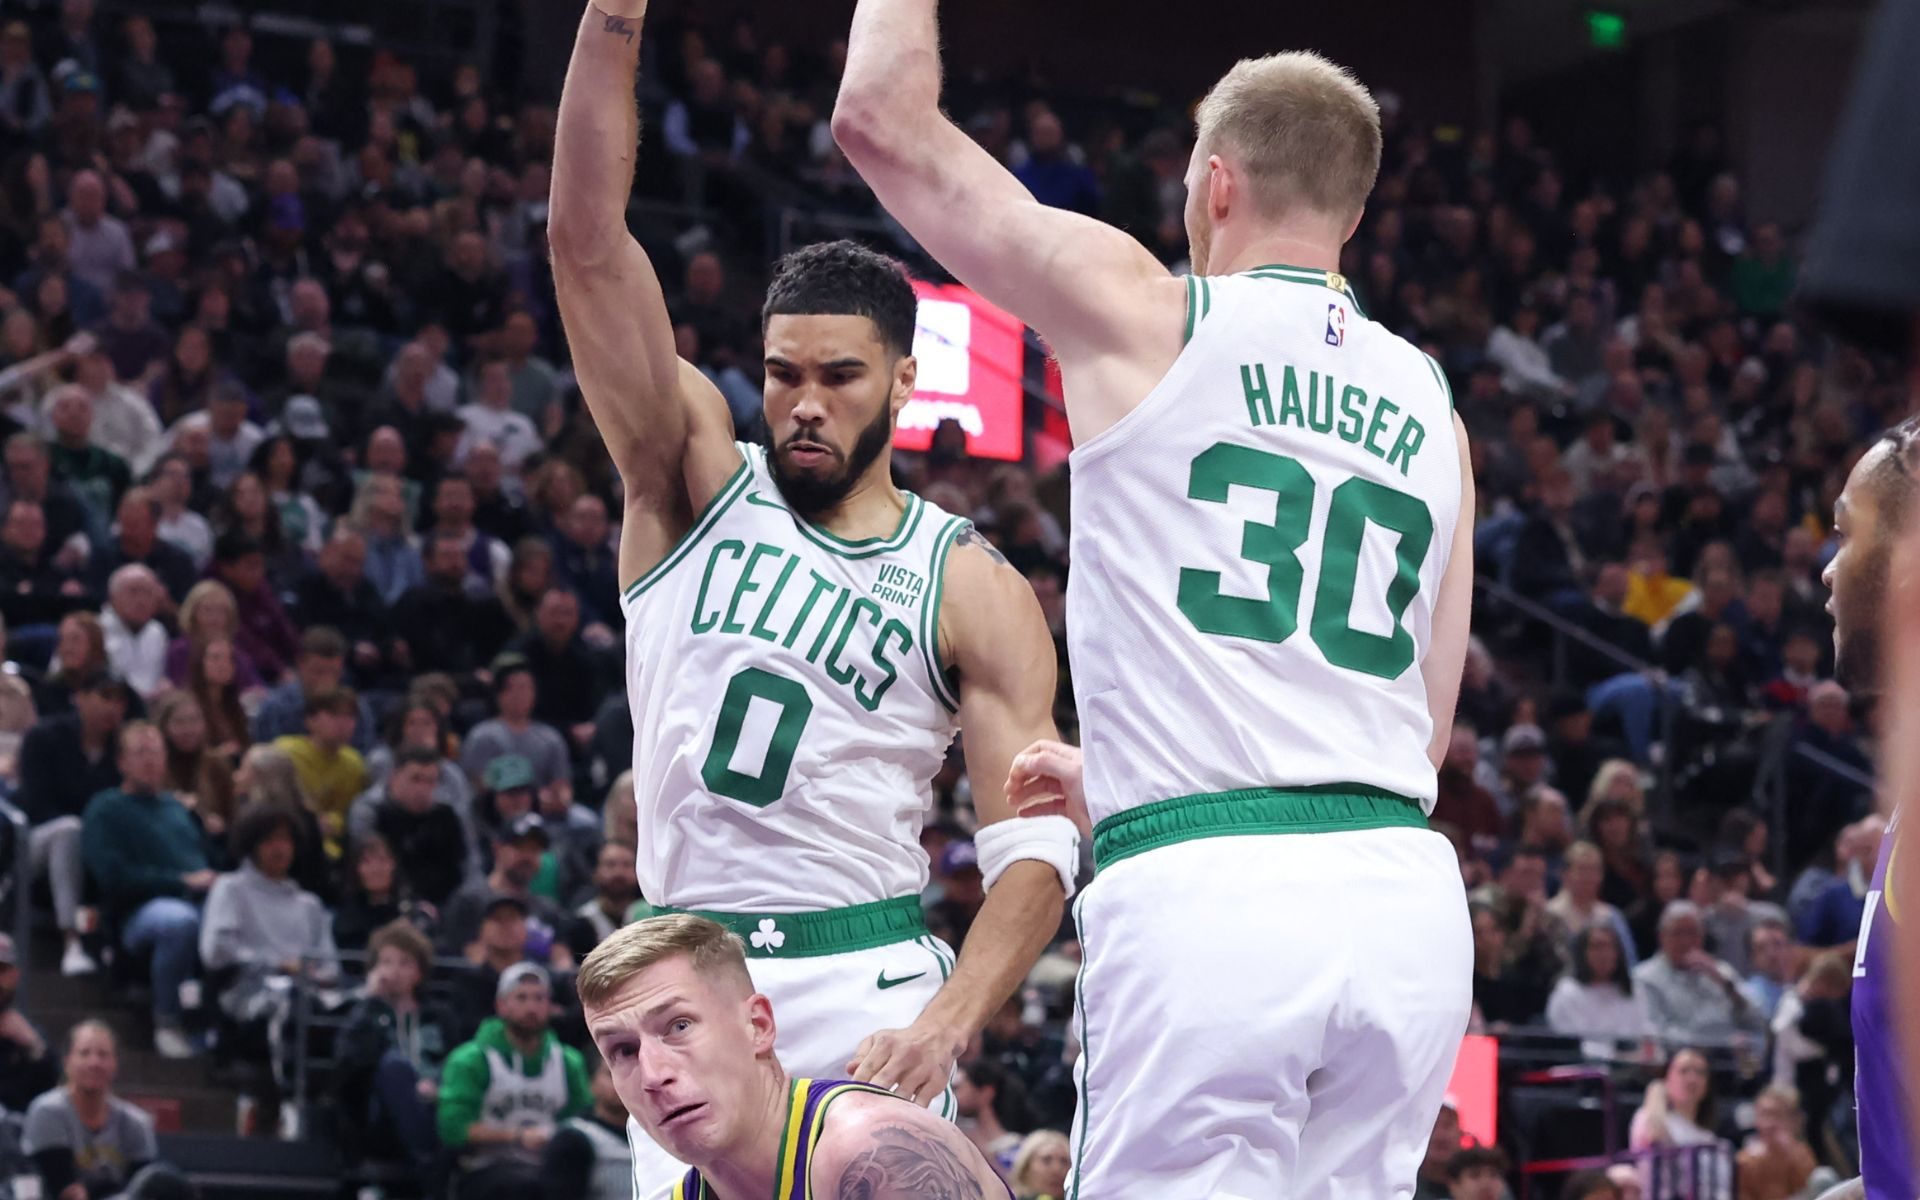 Jayson Tatum, Sam Hauser combine for 50 in Celtics’ rout of lowly Hornets